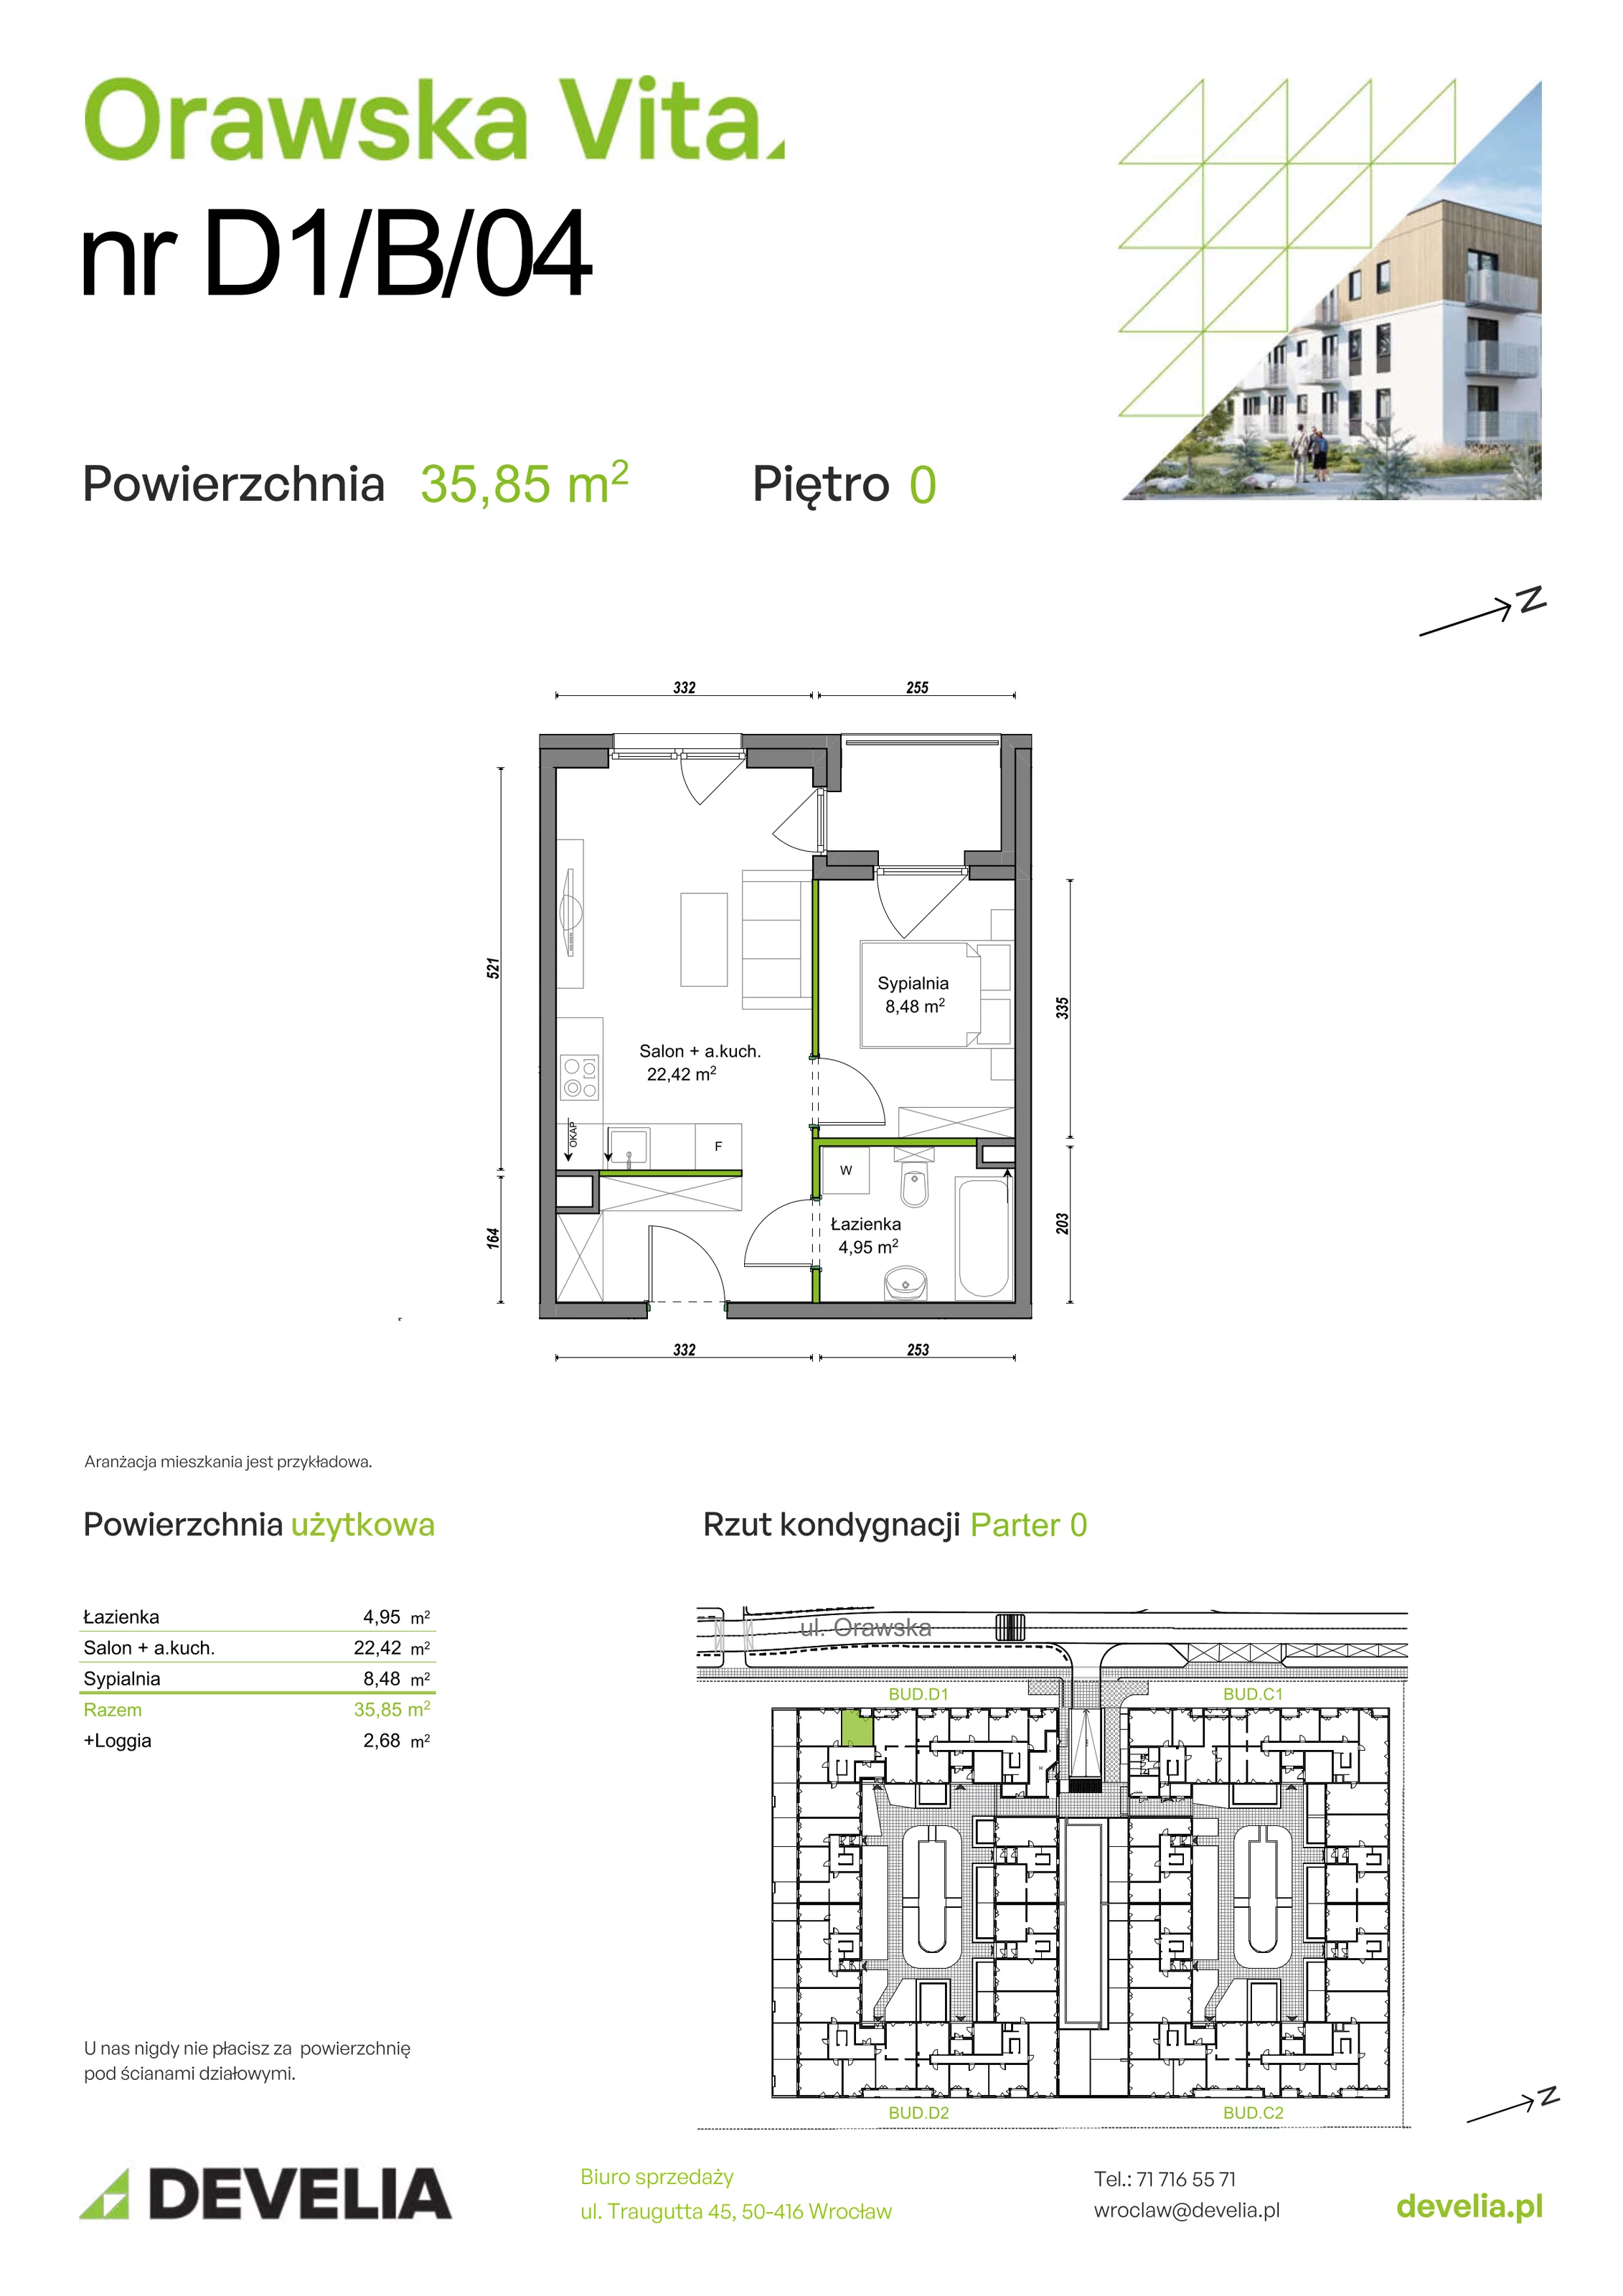 Mieszkanie 35,85 m², parter, oferta nr D1/B/04, Orawska Vita, Wrocław, Ołtaszyn, Krzyki, ul. Orawska 73